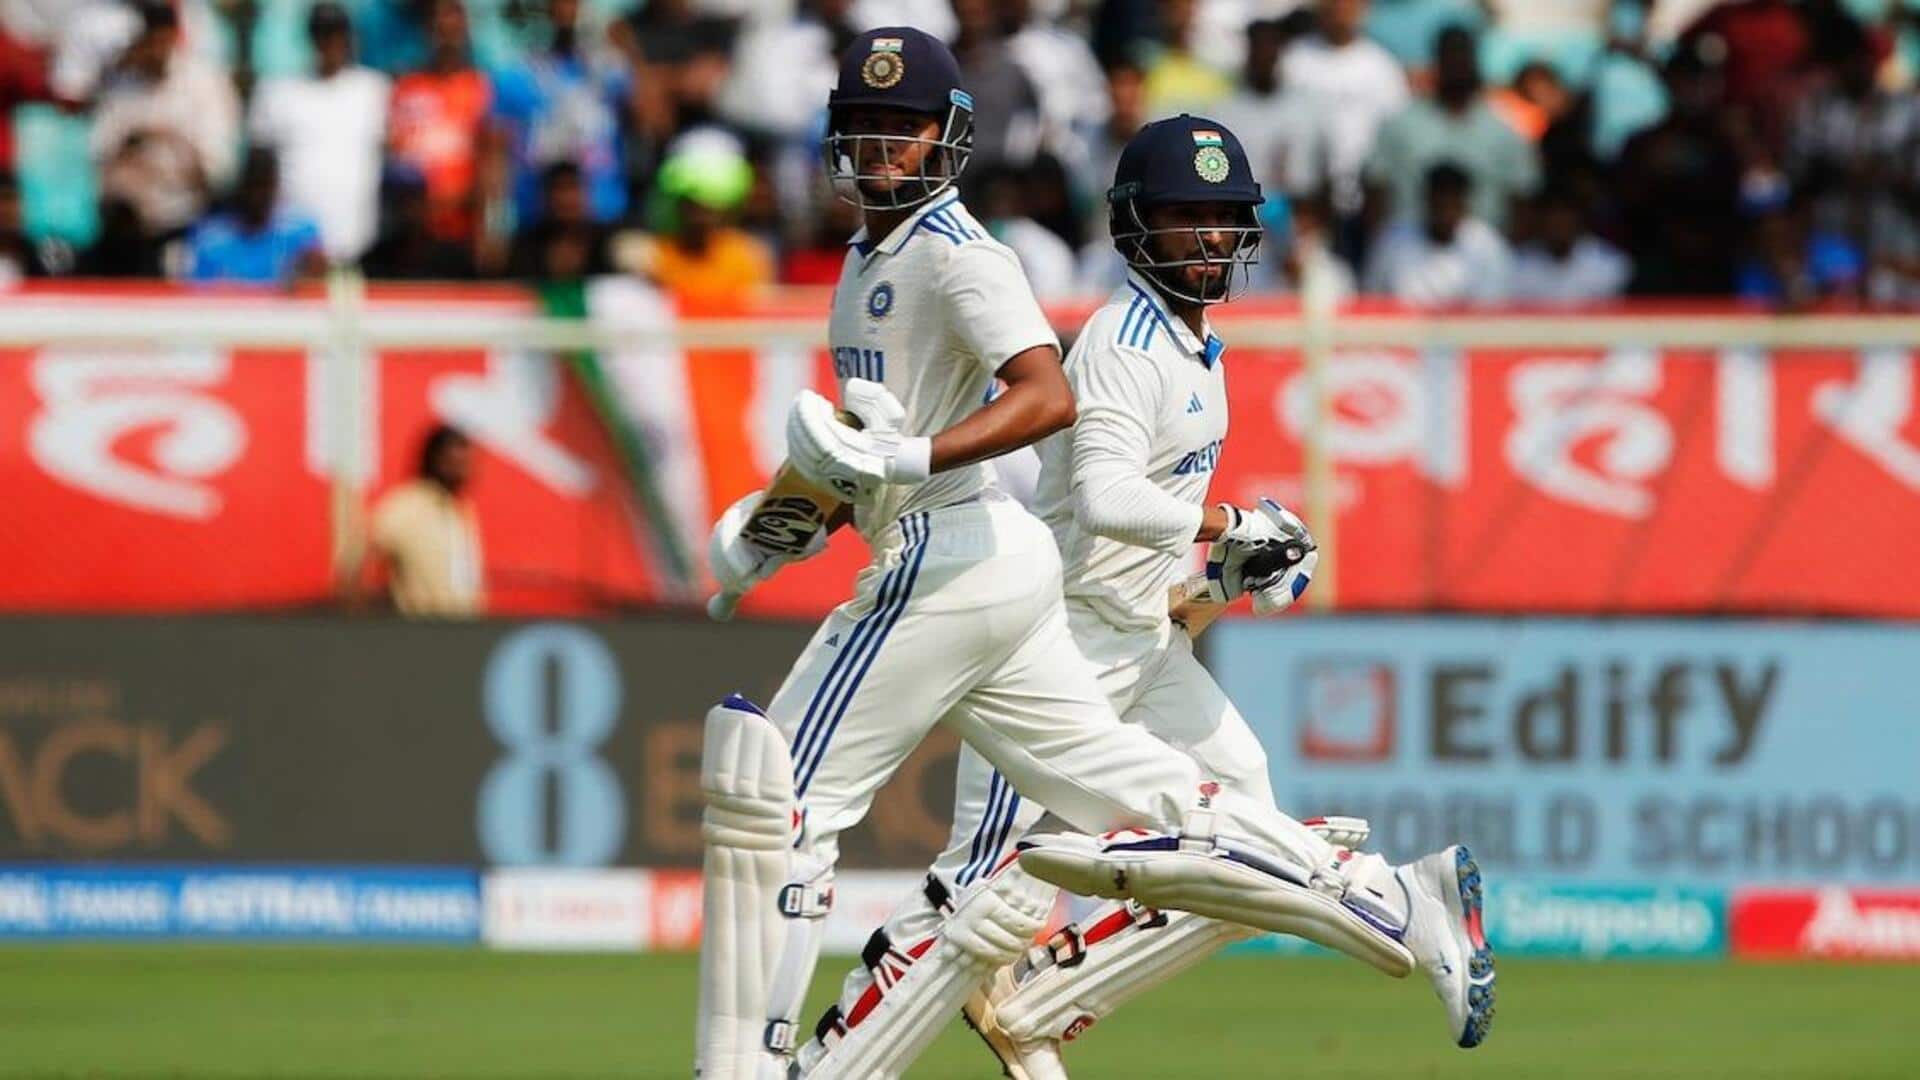 दूसरा टेस्ट: पहले दिन भारत ने बनाए 336 रन, यशस्वी जायसवाल ने खेली उम्दा पारी 